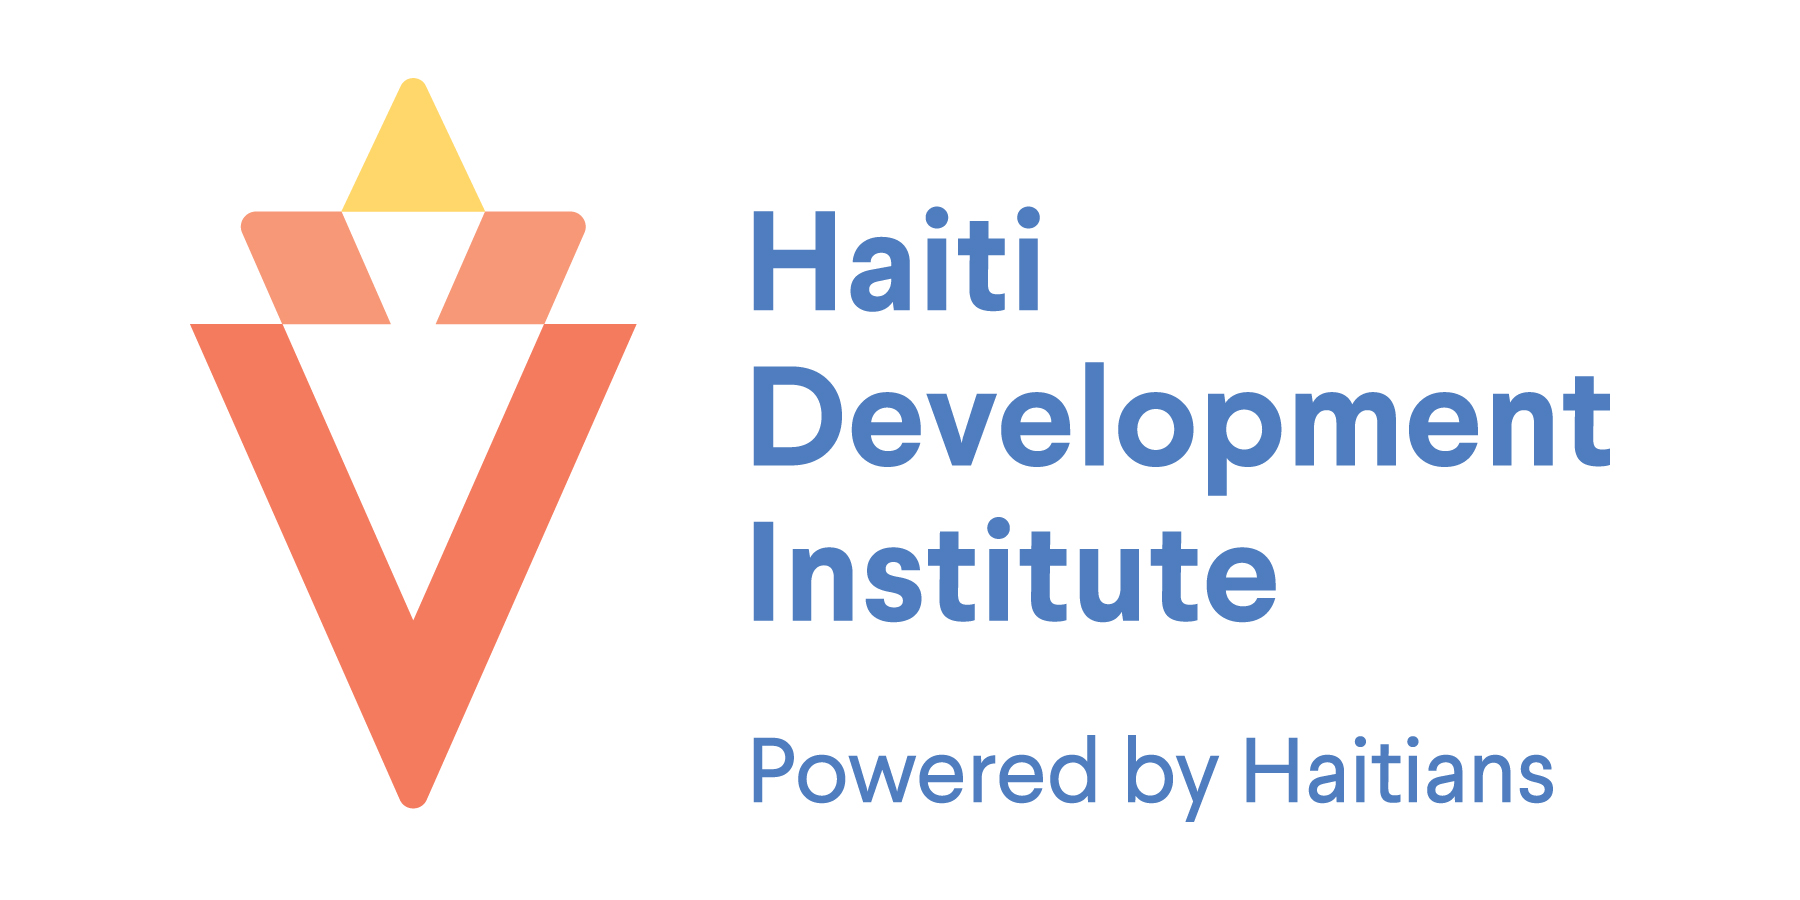 Haiti Development Institute logo